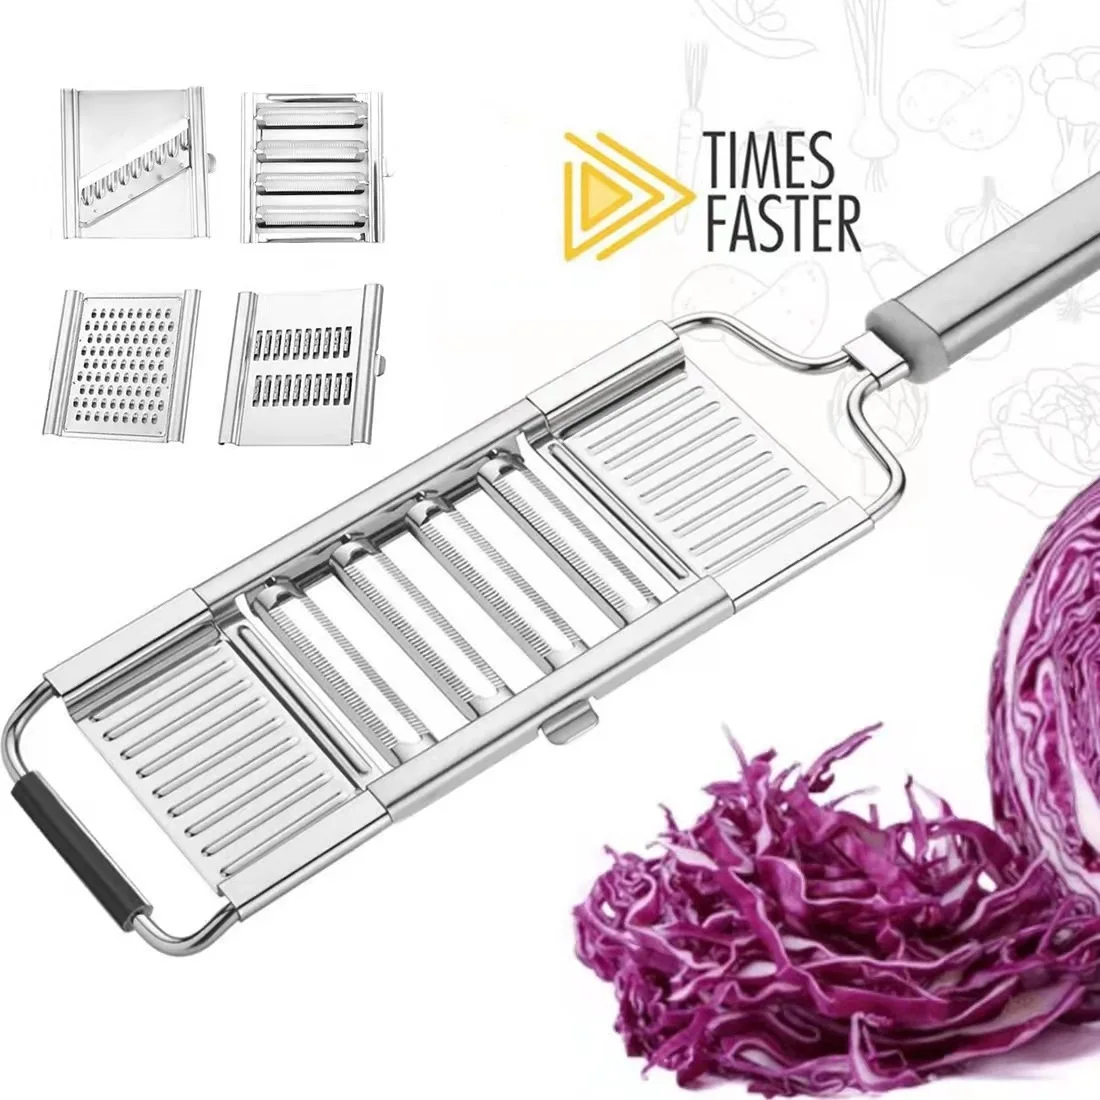 adjustable kitchen tools hand-held shredder cutter